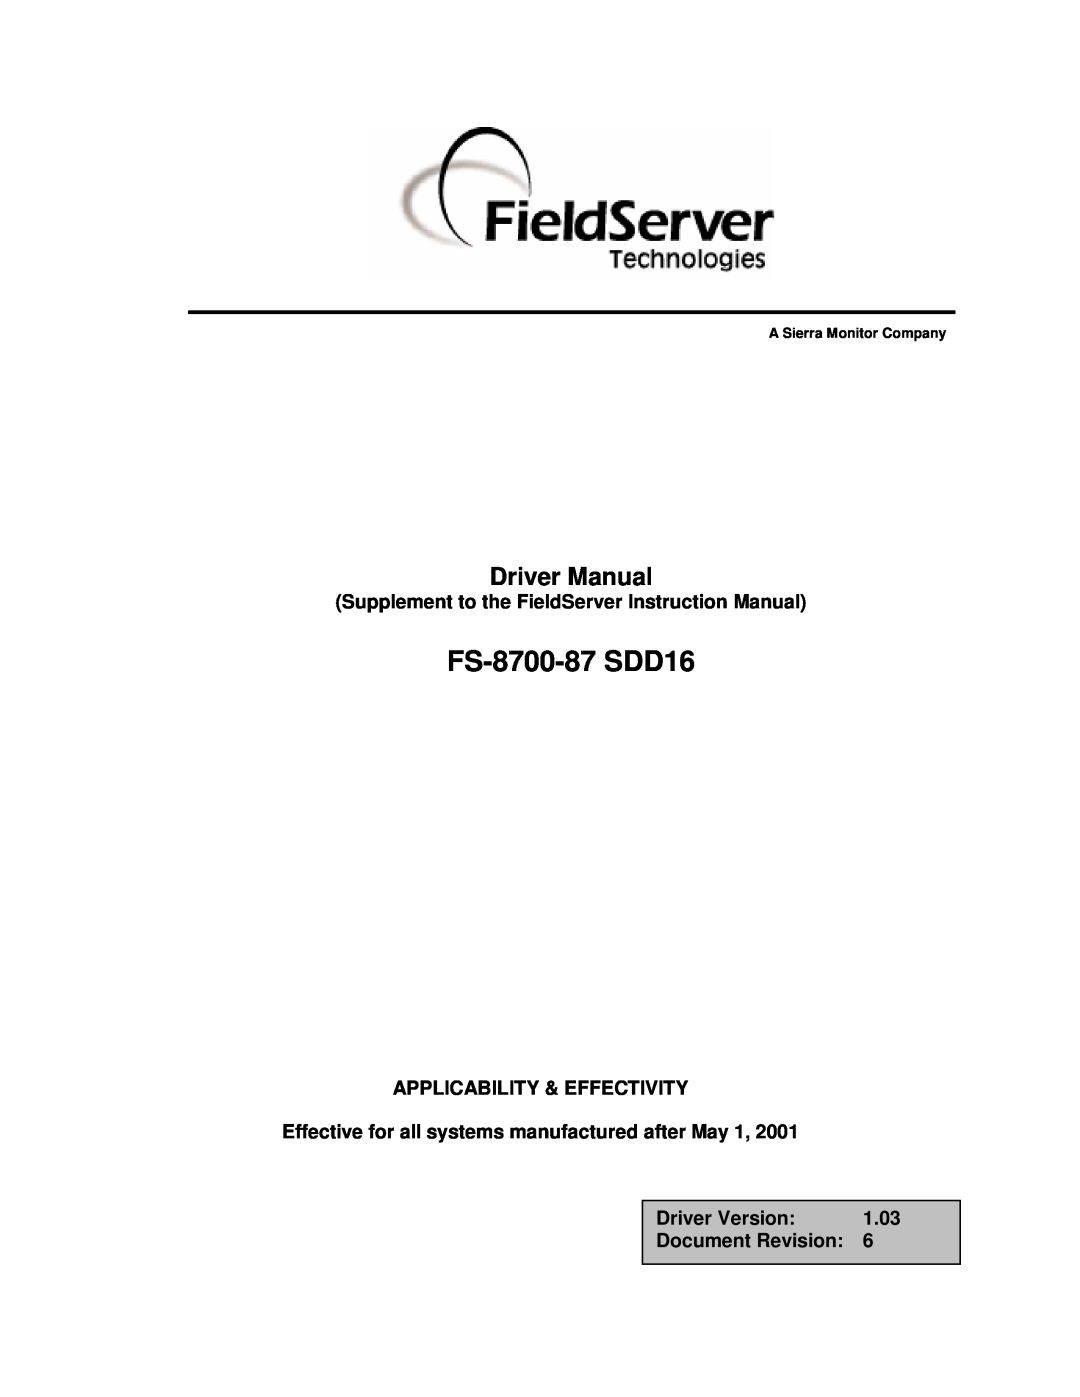 FieldServer instruction manual FS-8700-87 SDD16, Driver Manual, A Sierra Monitor Company 